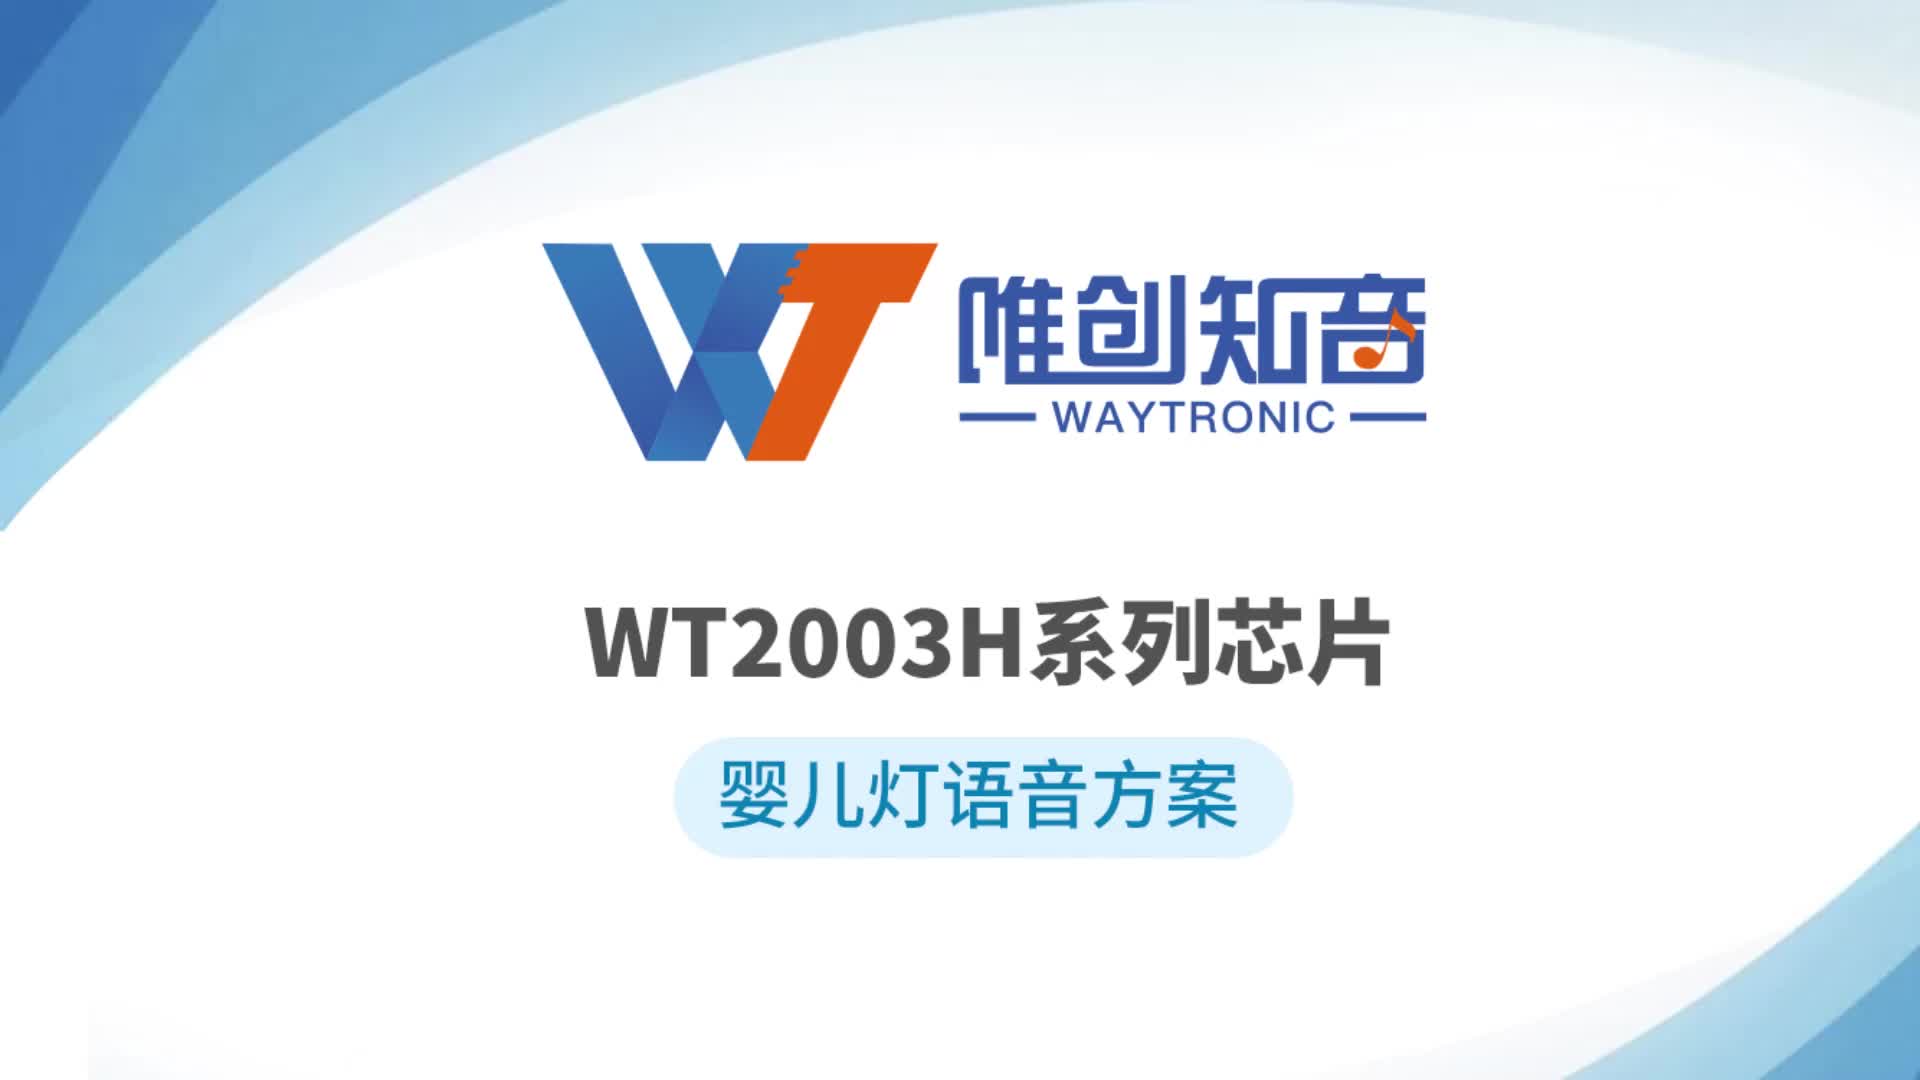 WT2003H，婴儿摇篮语音芯片方案，MP3高音质音频芯片，WT唯创知音 #语音芯片 